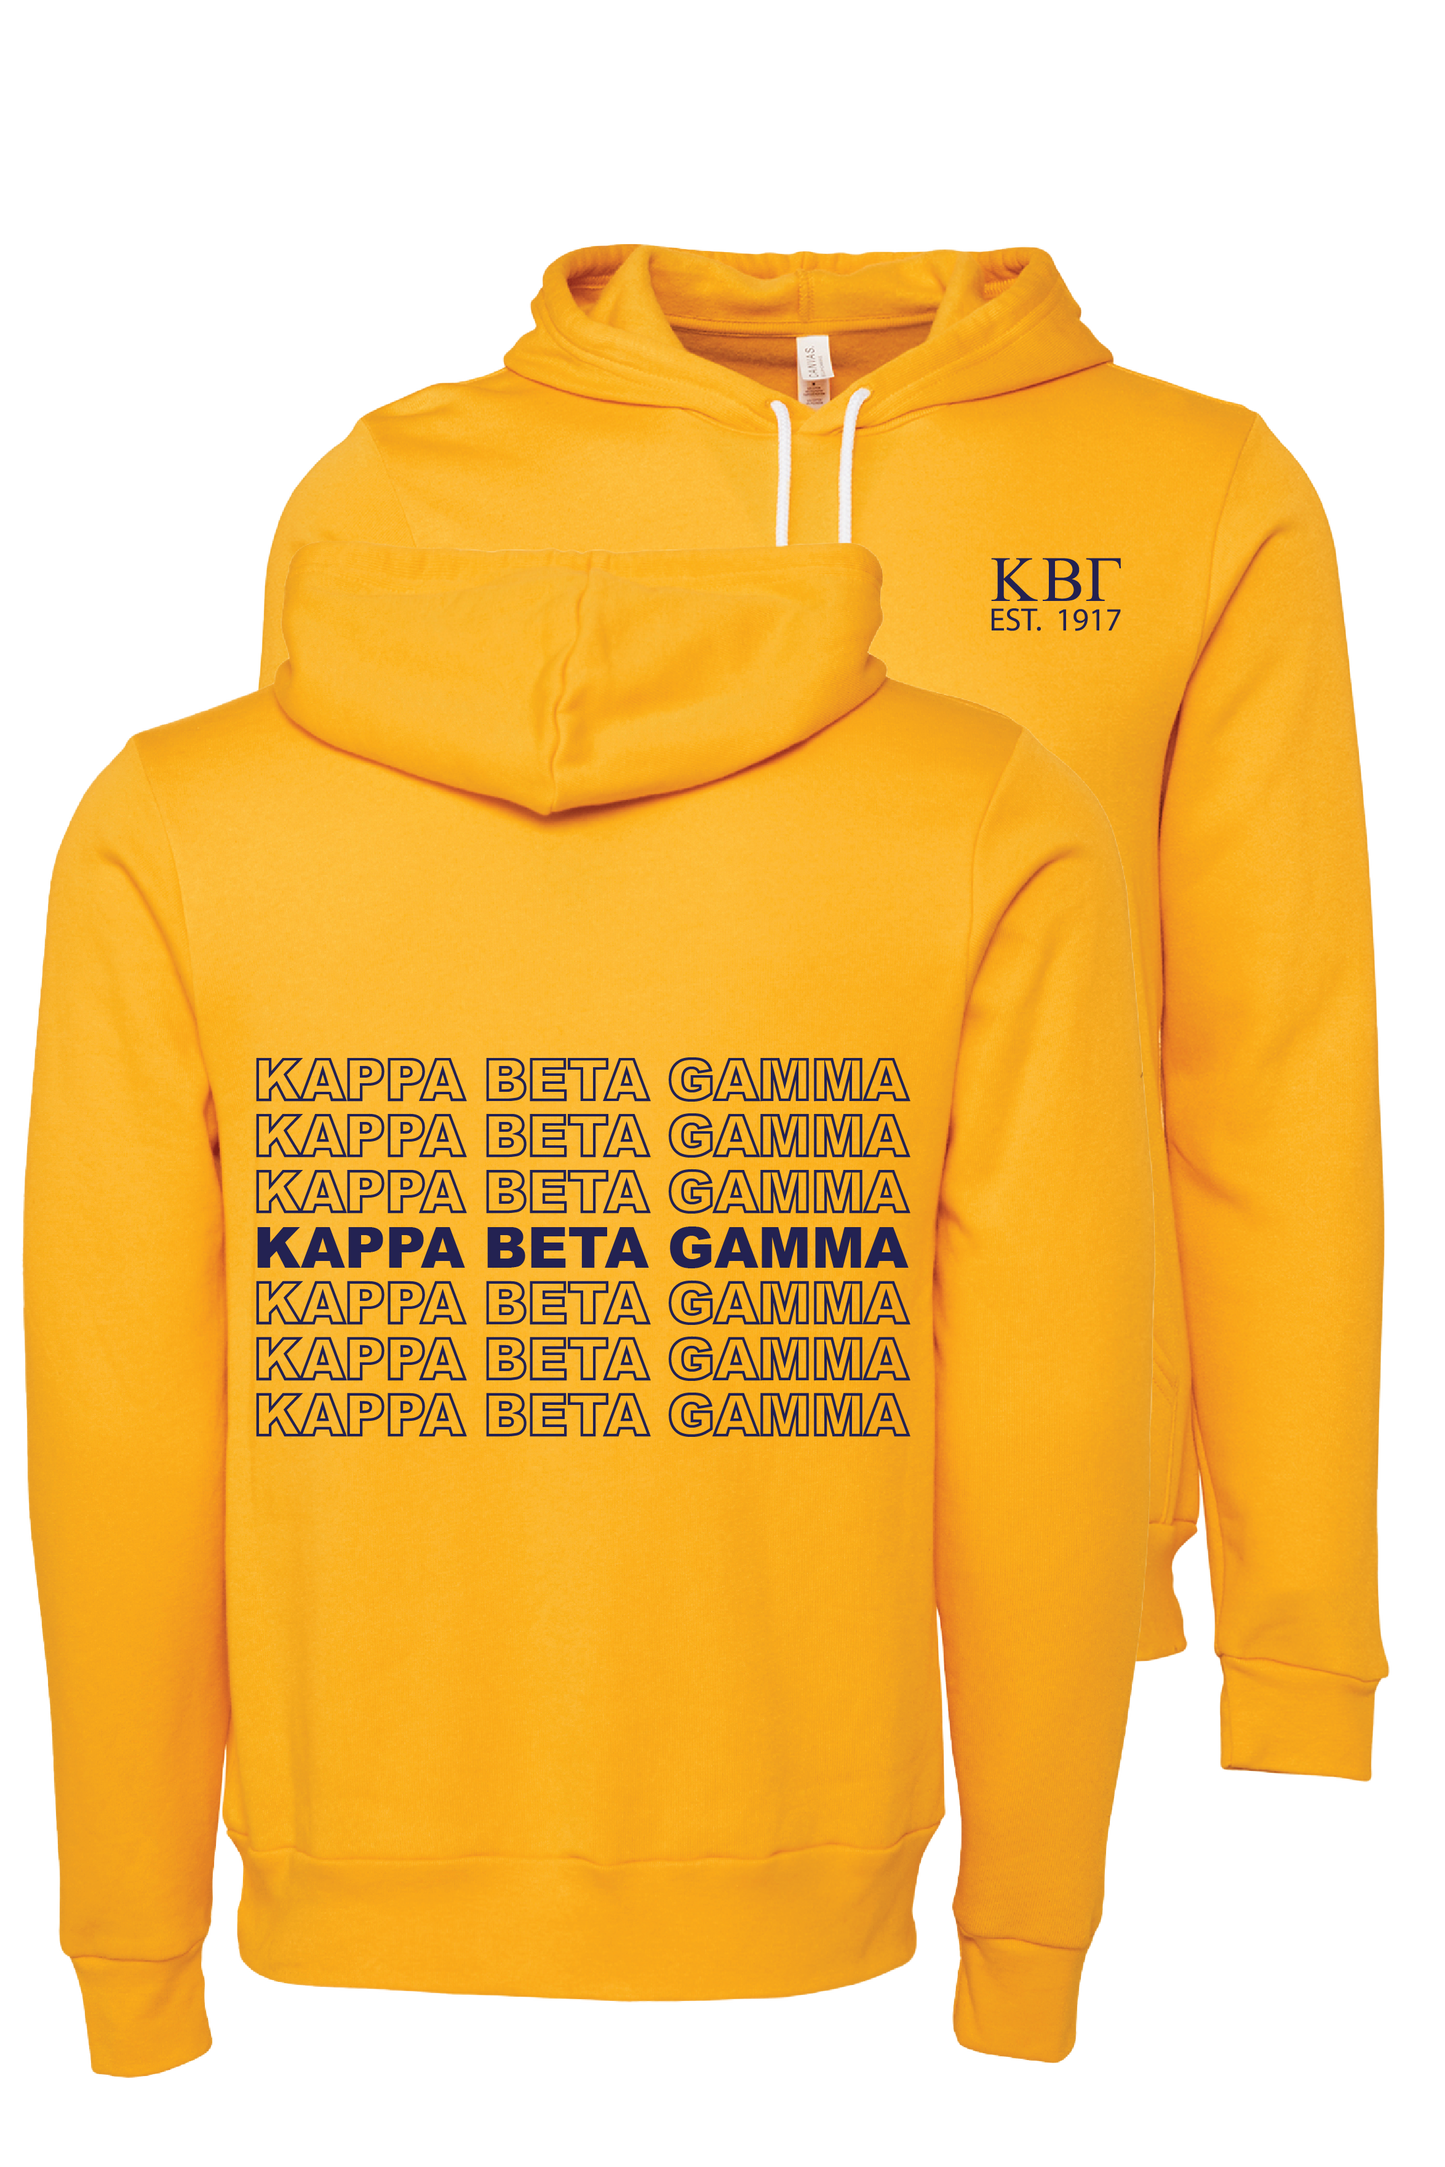 Kappa Beta Gamma Repeating Name Hooded Sweatshirts